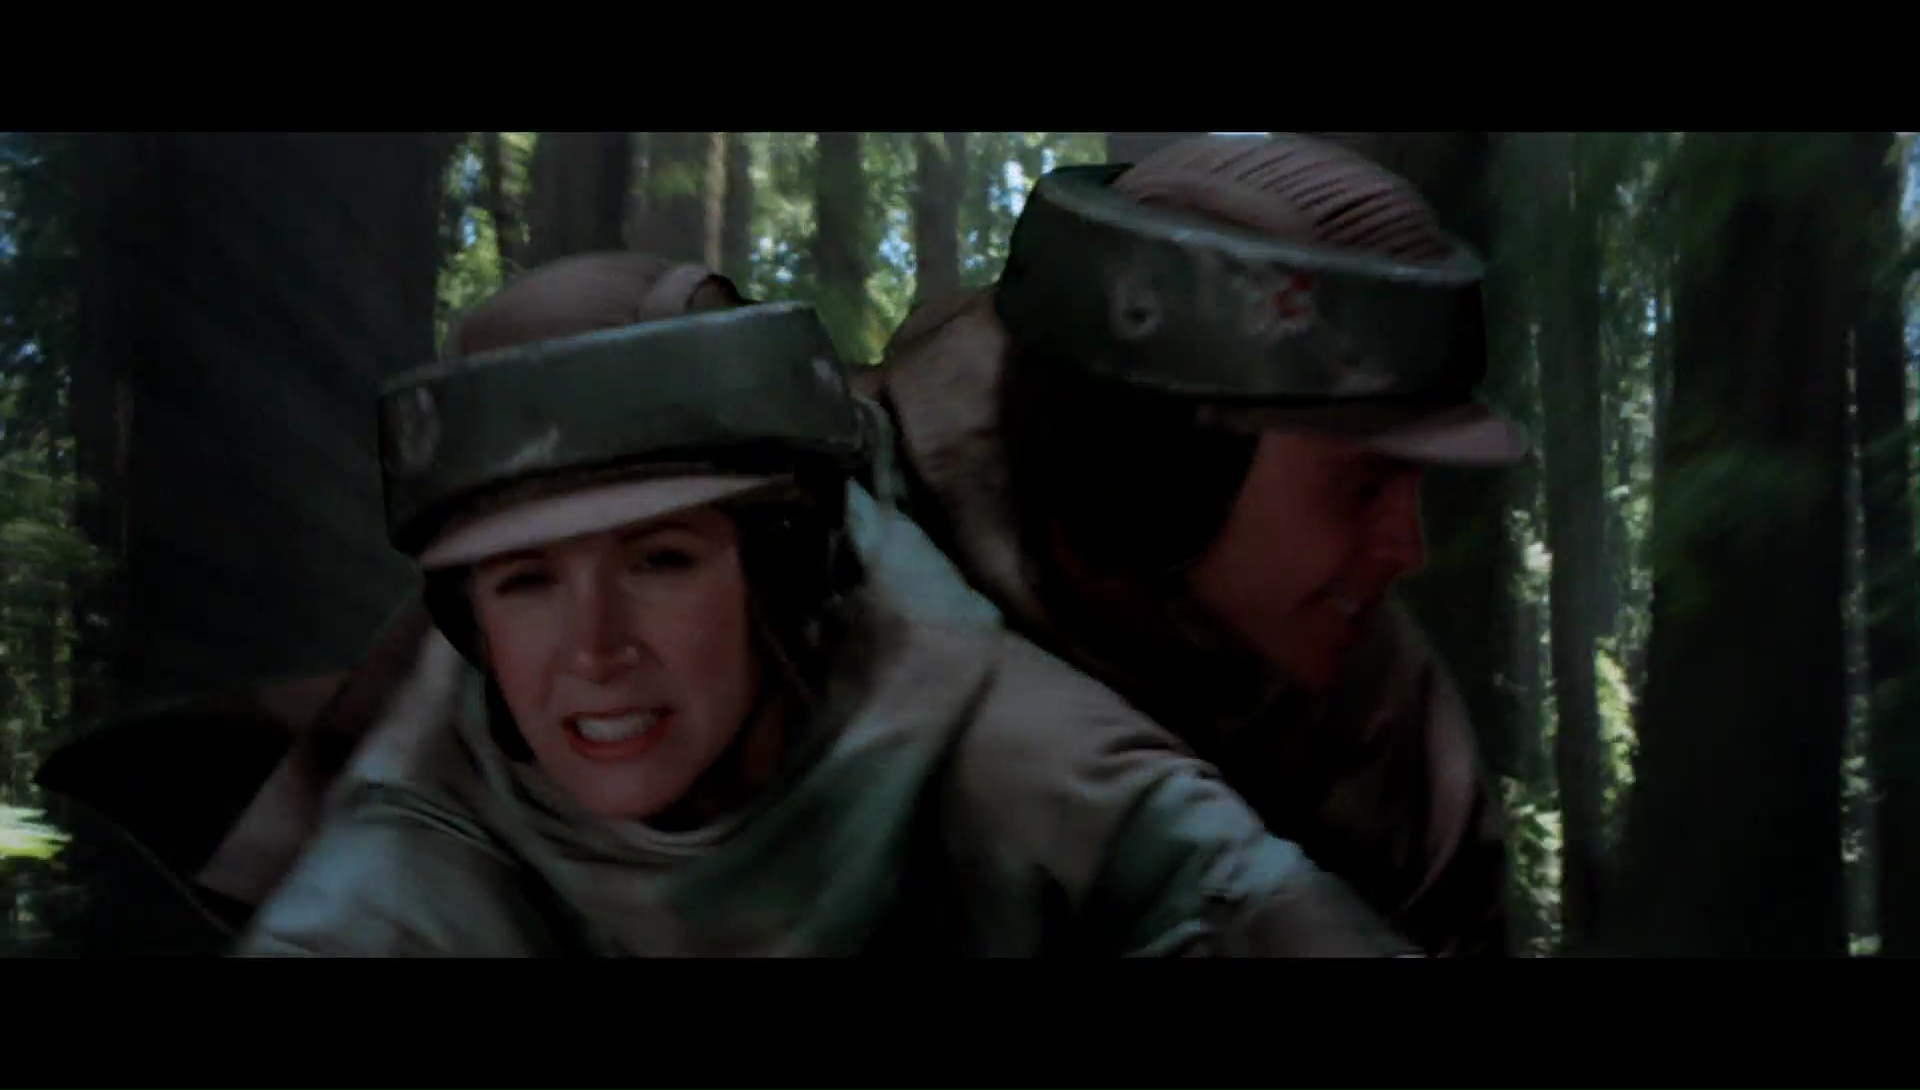 Star Wars Episodio VI 1080p Lat-Cast-Ing 5.1 (1983) Pdzb0m8U_o